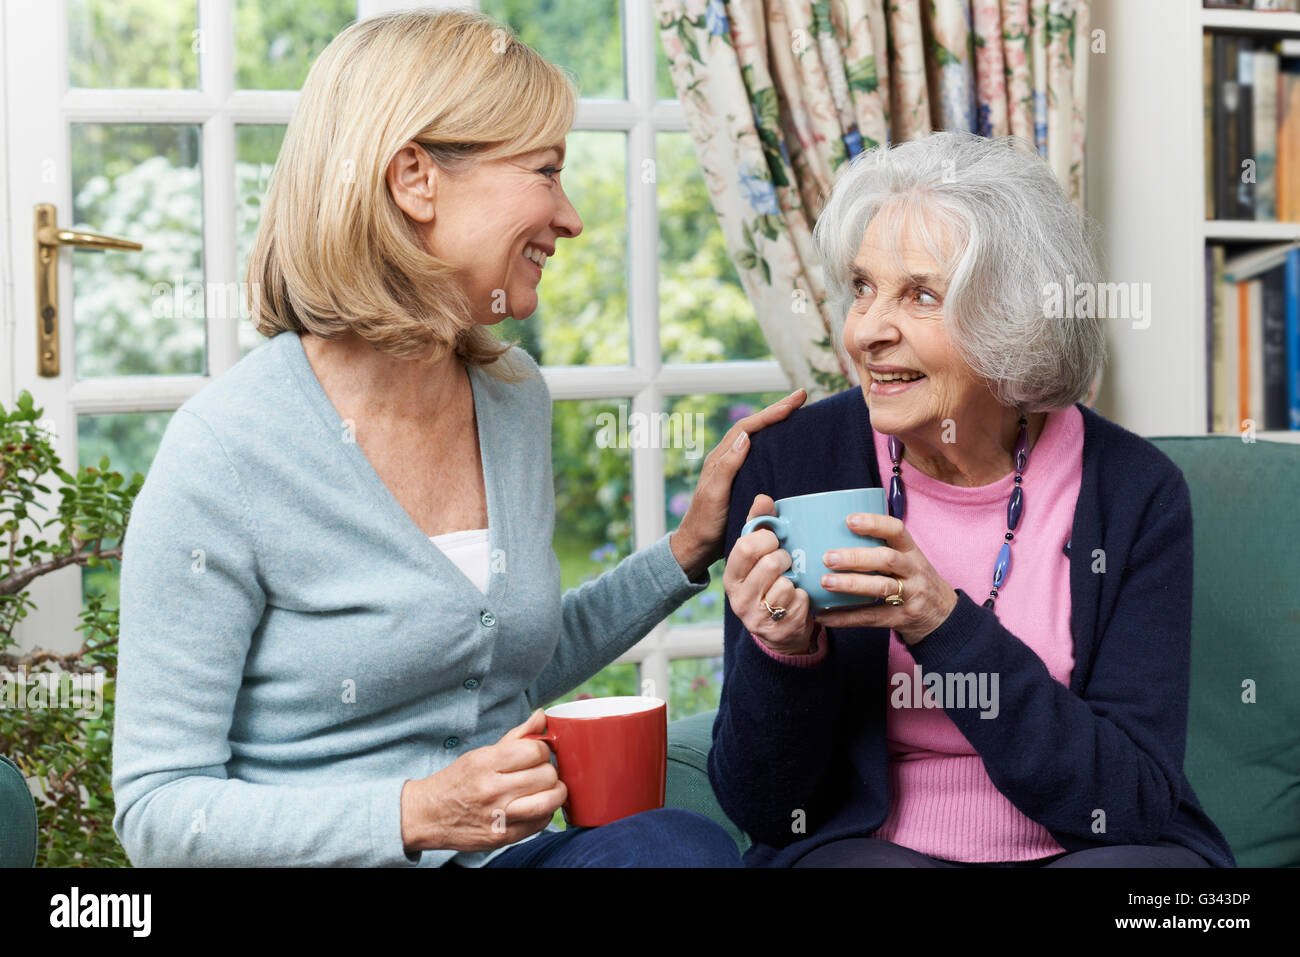 Woman Taking Time To Visit Senior Female Neighbor And Talk Stock Photo